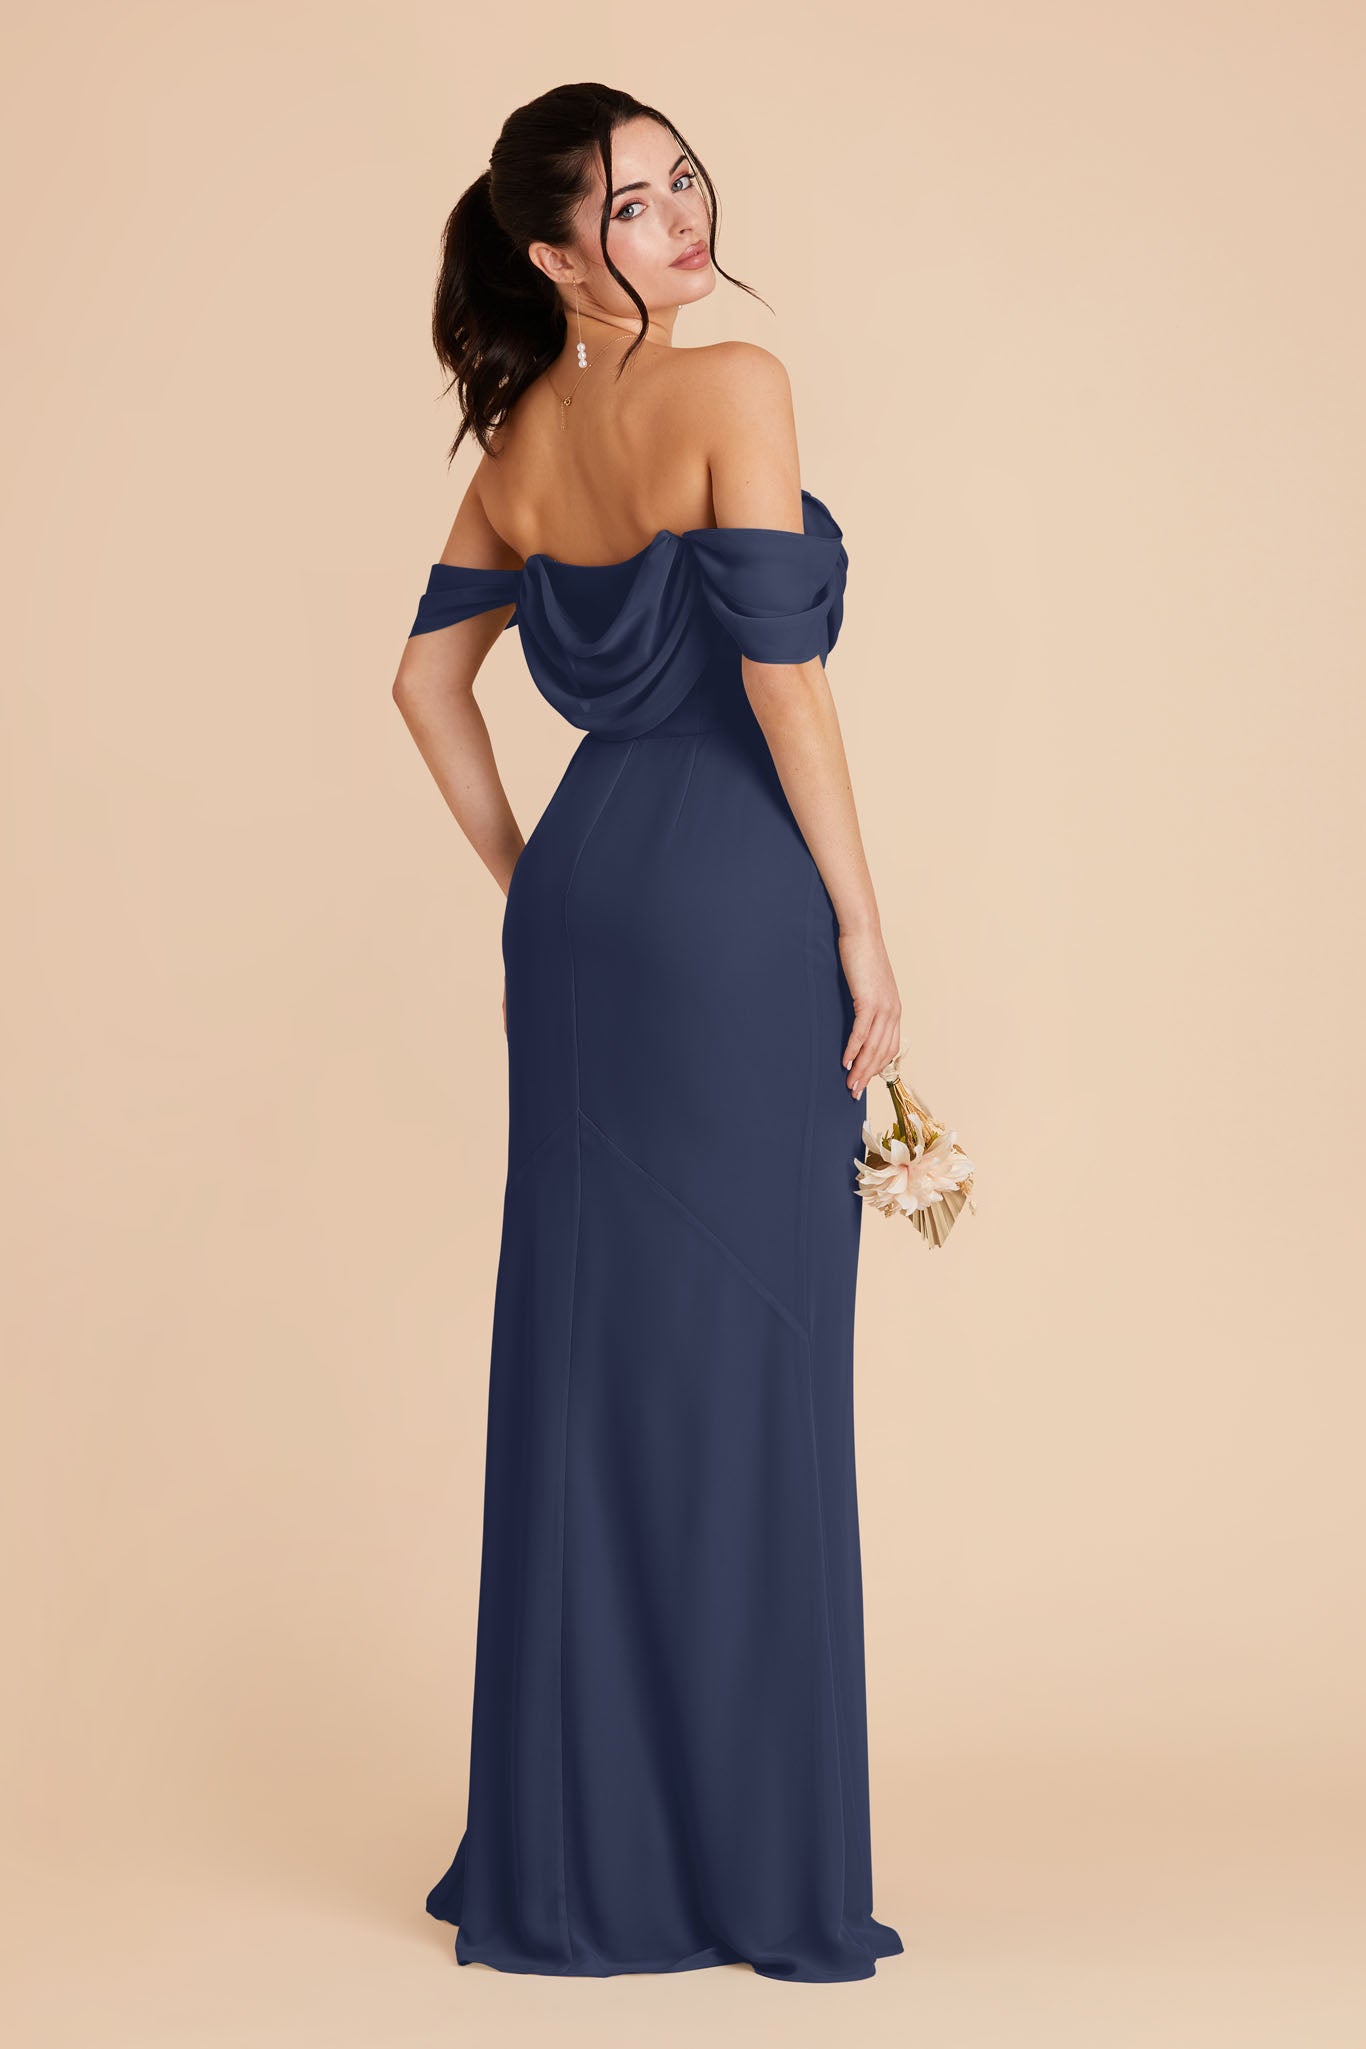 Slate Blue Mira Convertible Dress by Birdy Grey